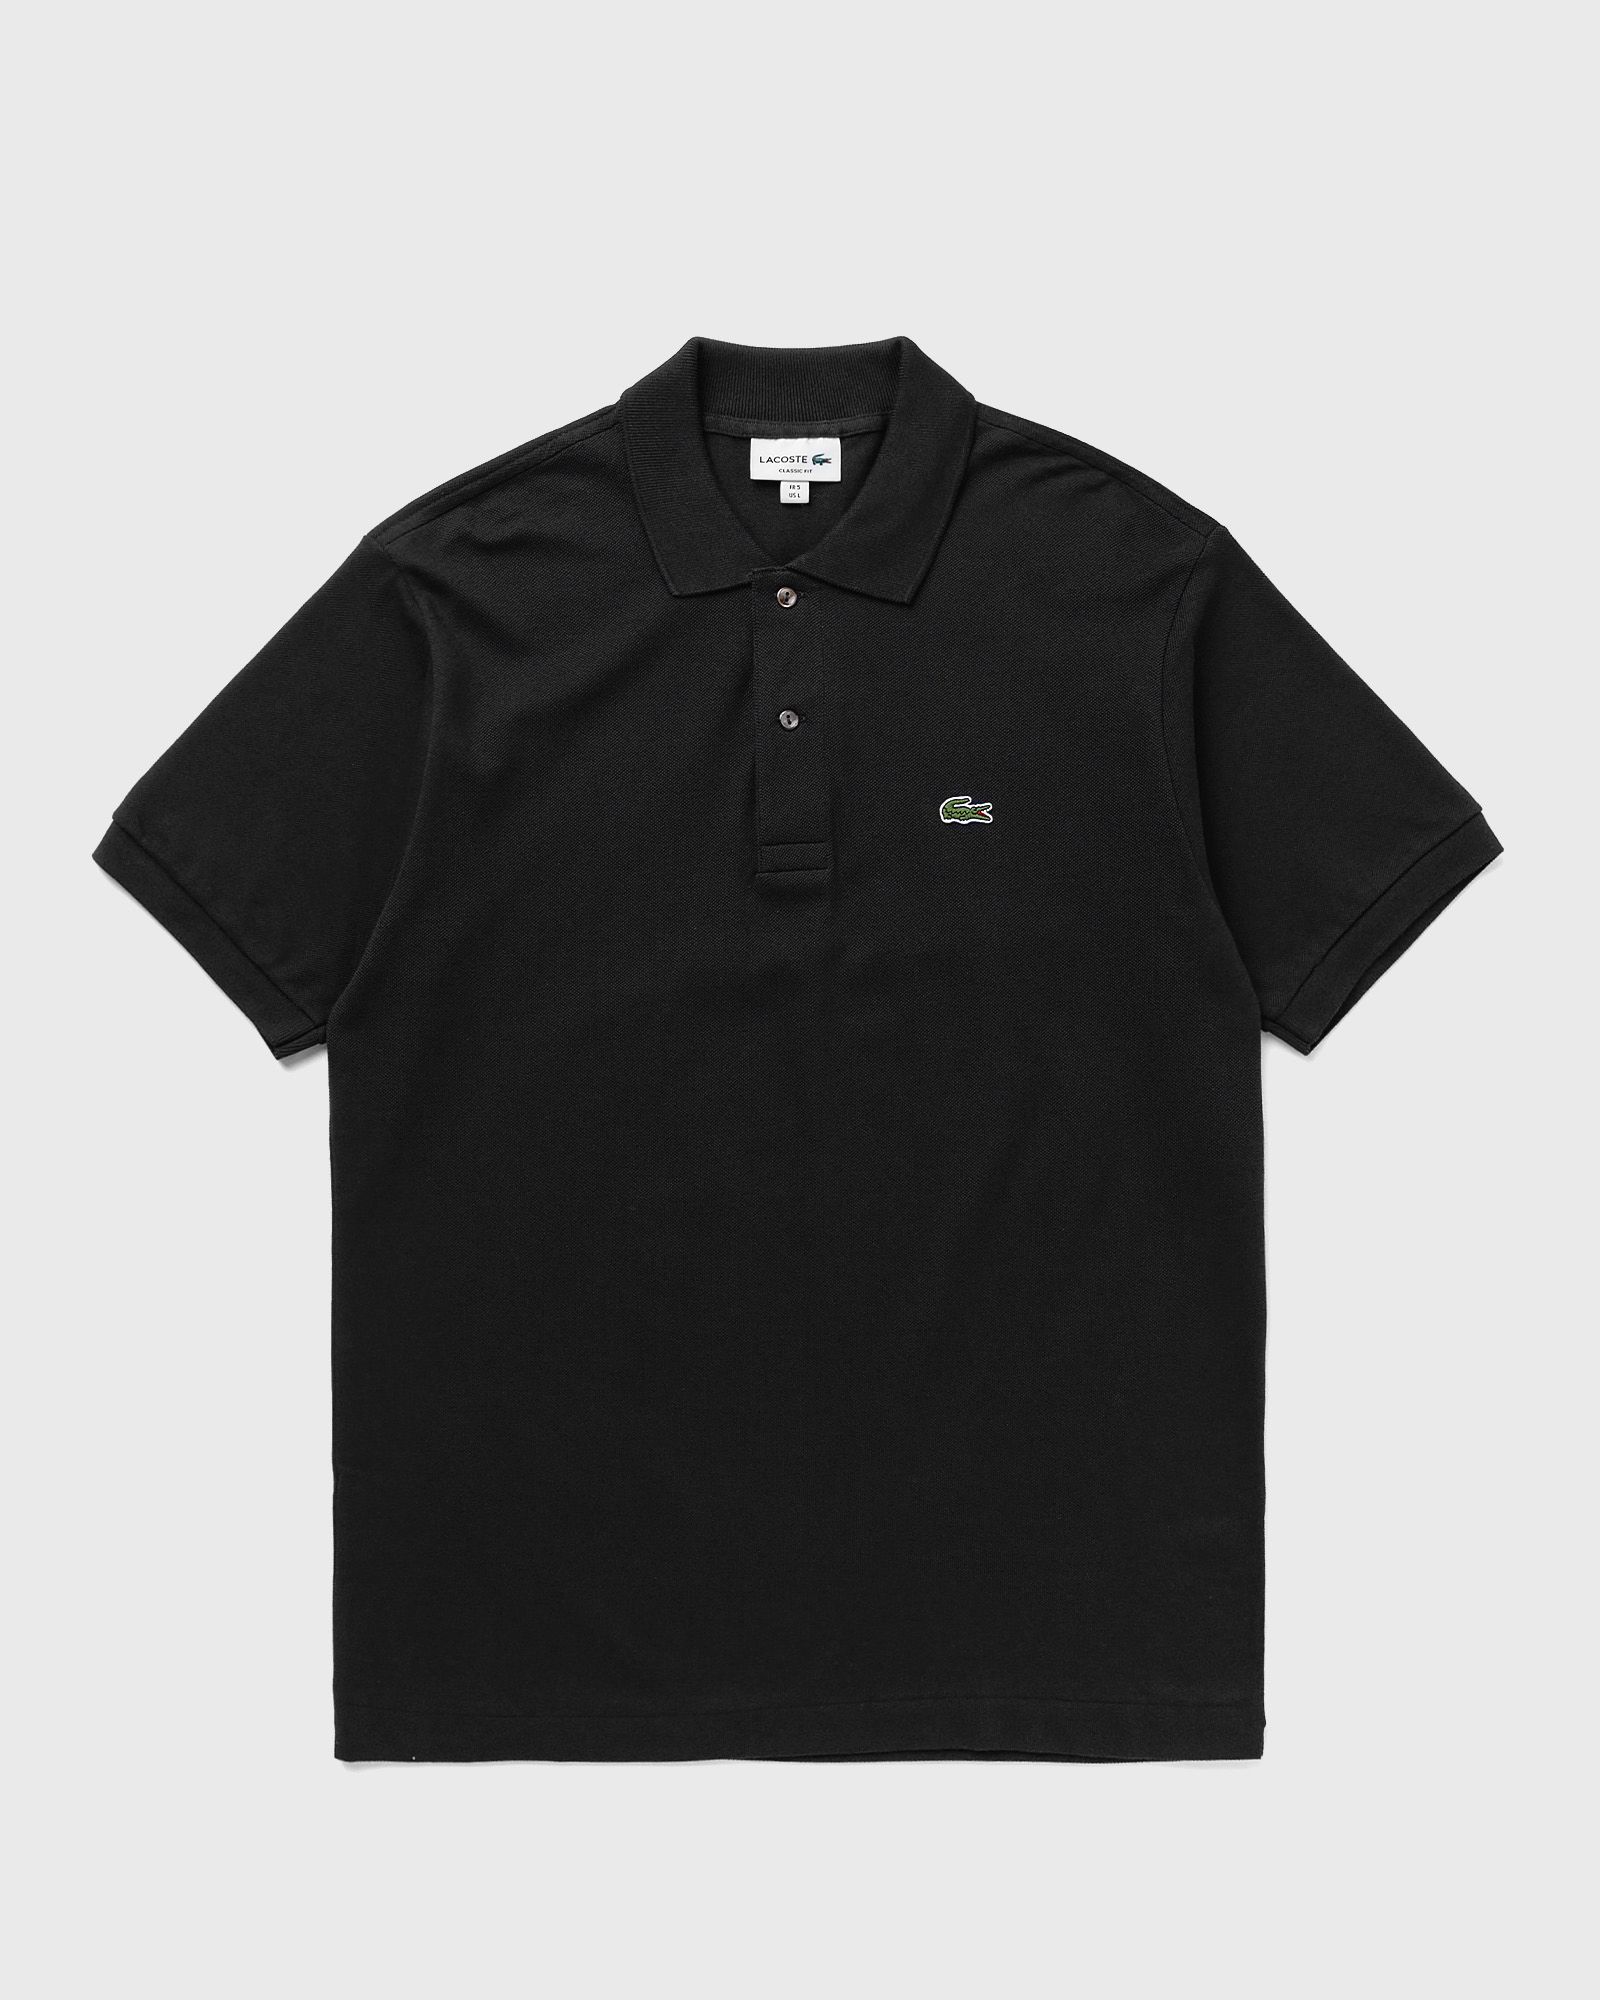 Lacoste - classic polo shirt men polos black in größe:l